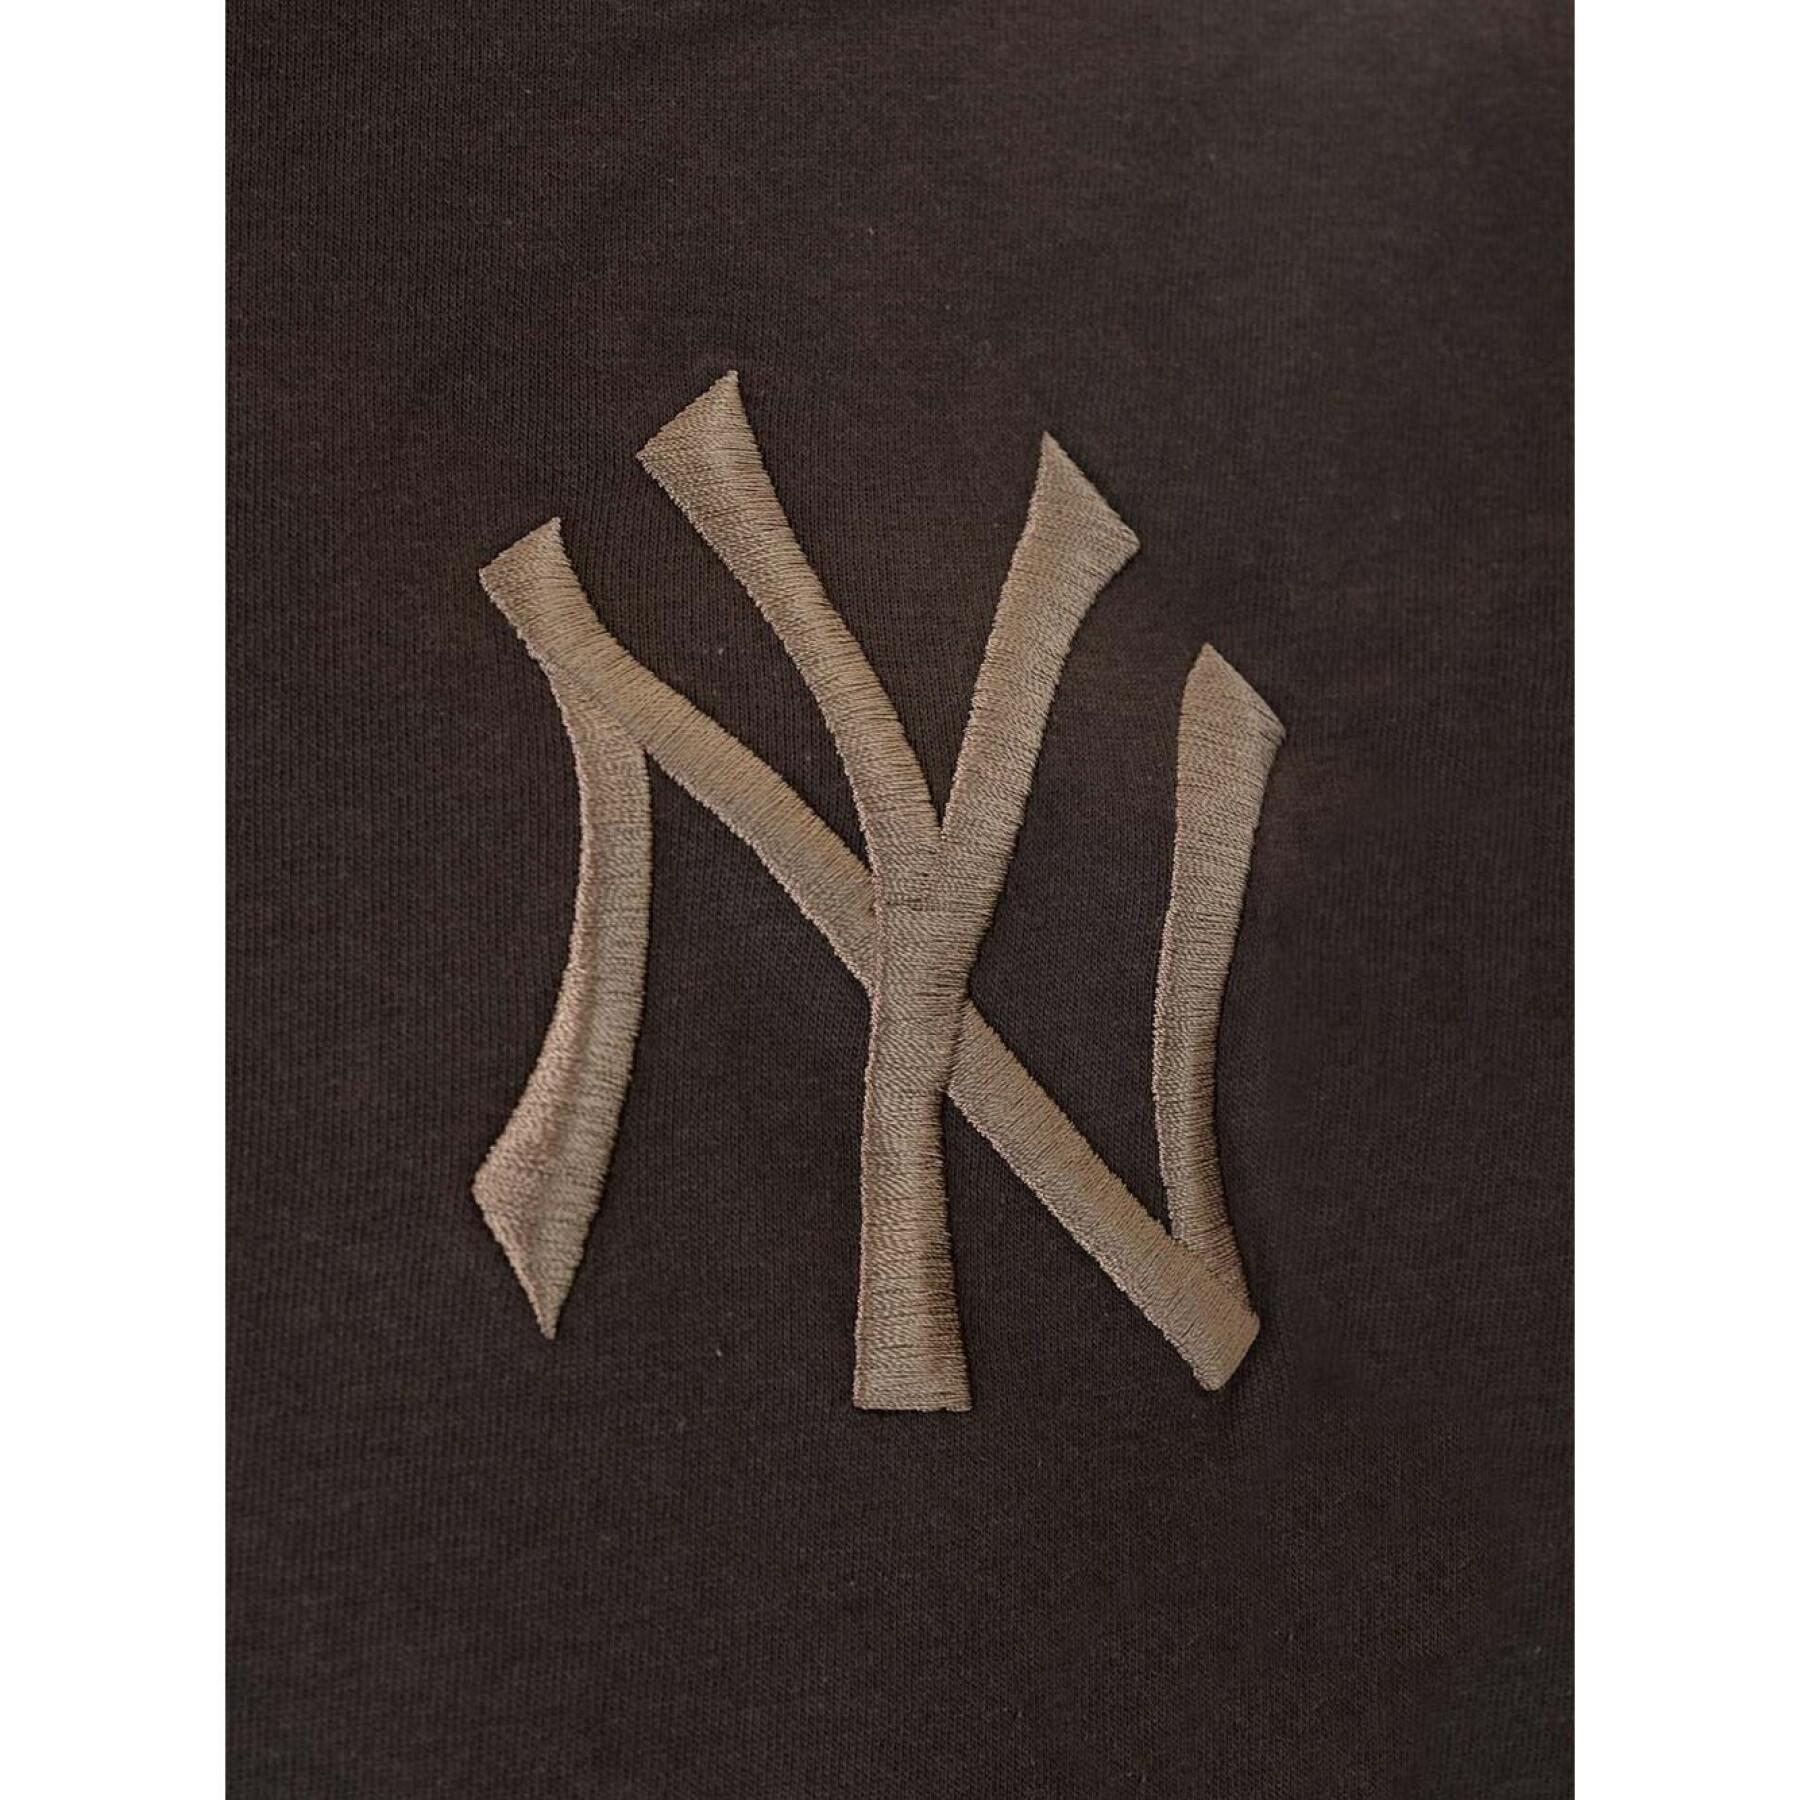 Maglietta New York Yankees MLB Emb Logo Oversized